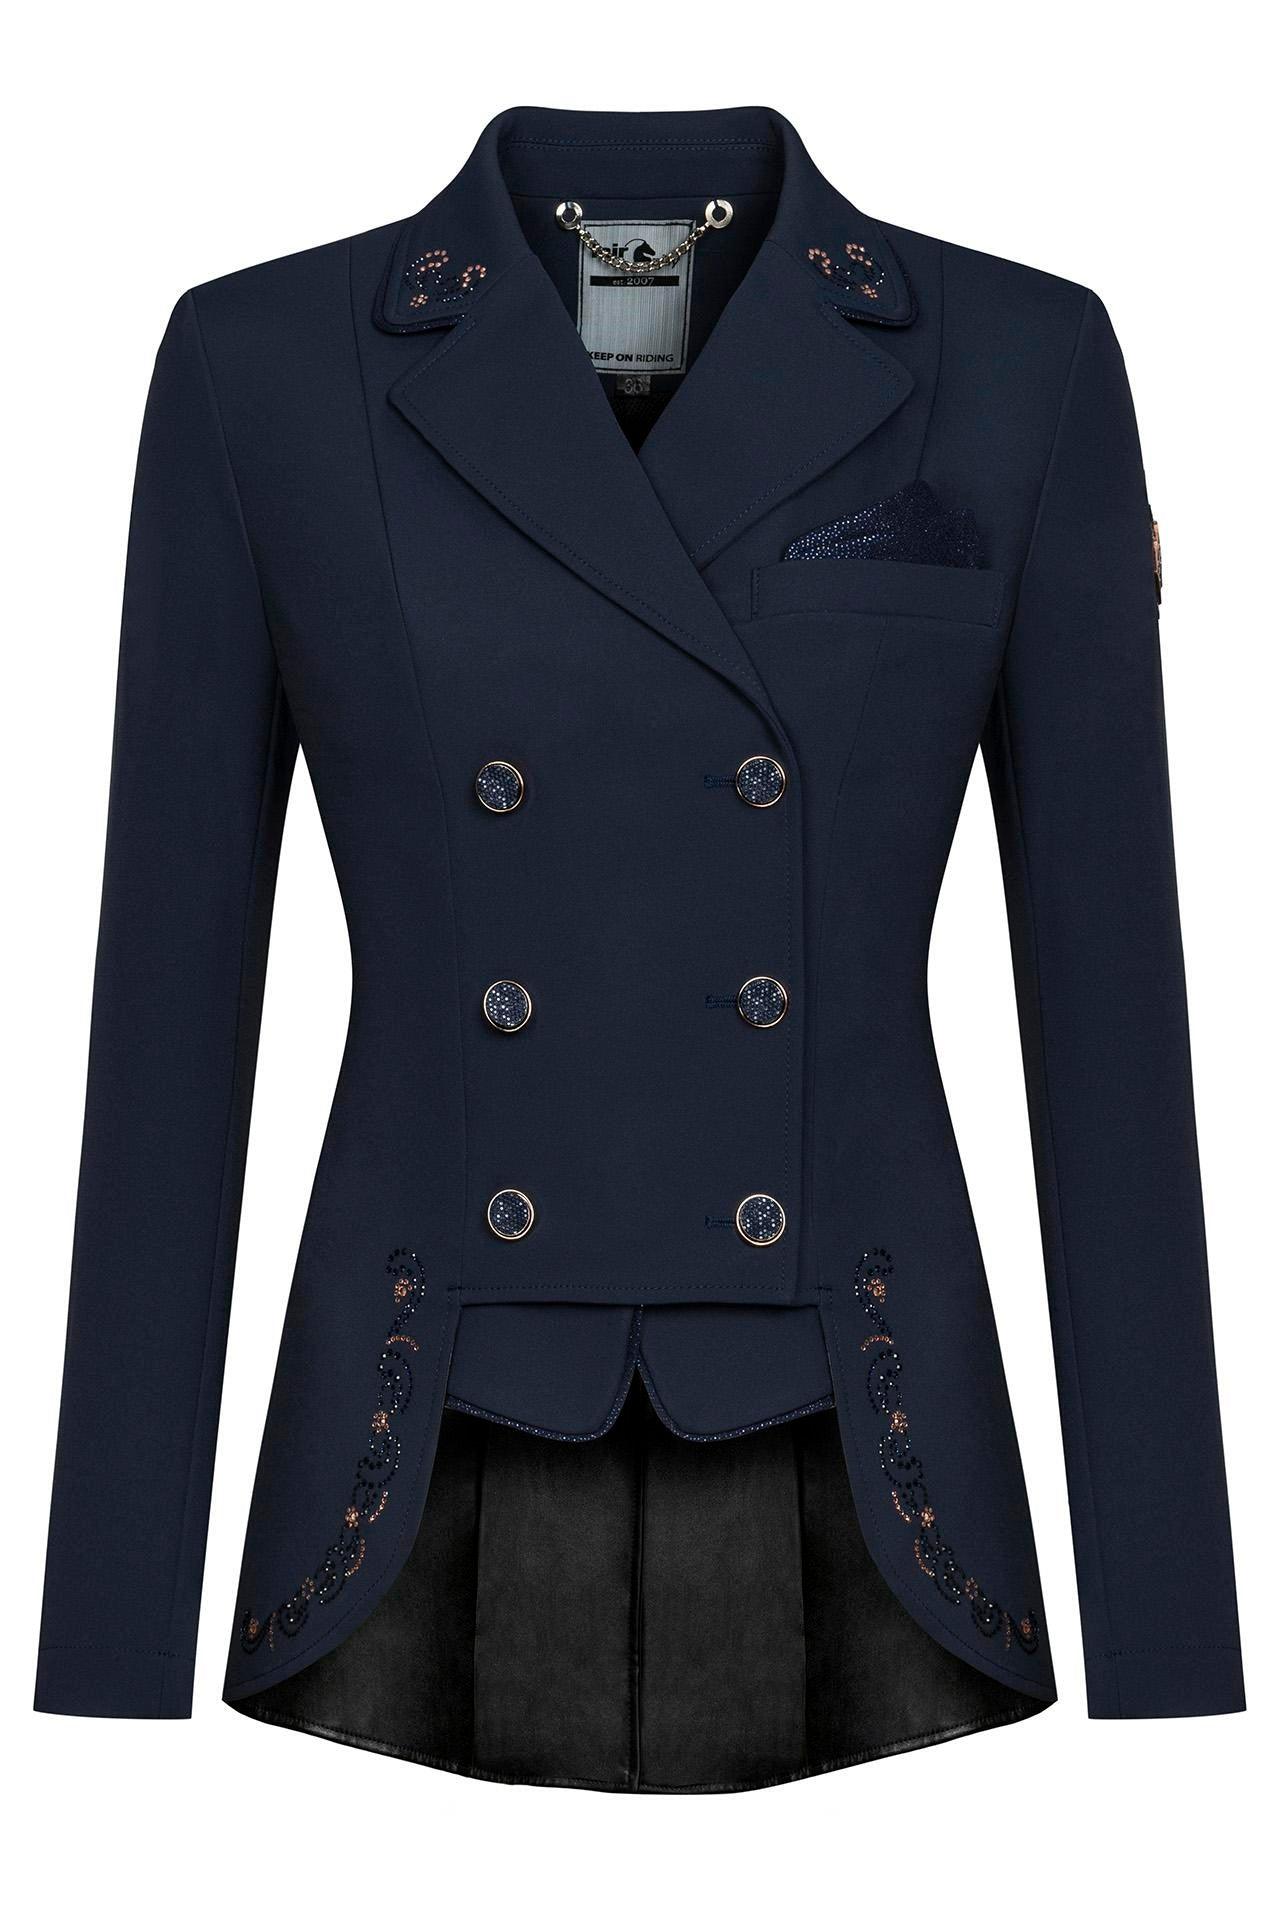 Fairplay Dressage Short Tailcoat Jacket Lexim Chic Rosegold